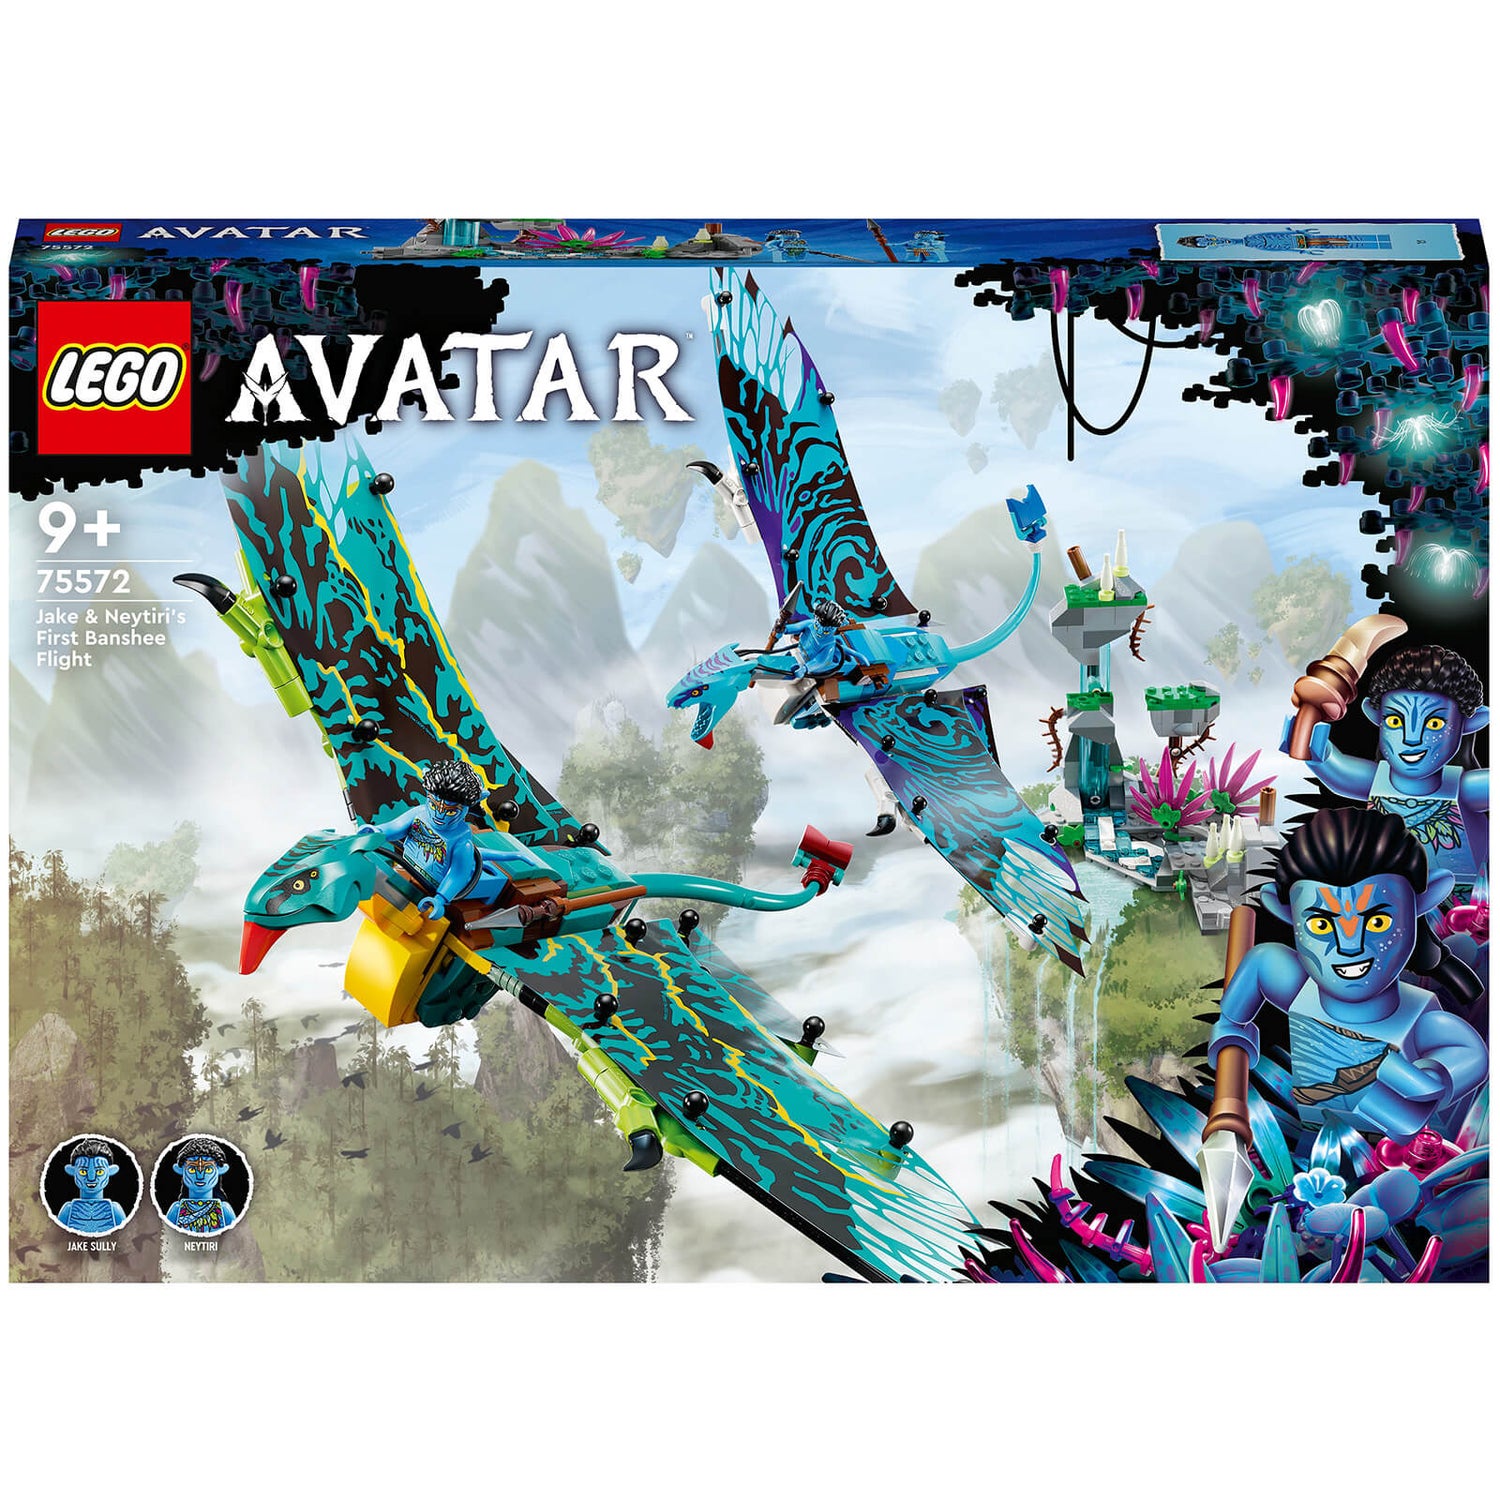 LEGO Avatar Jake & Neytiri's First Banshee Flight Set (75572) Toys